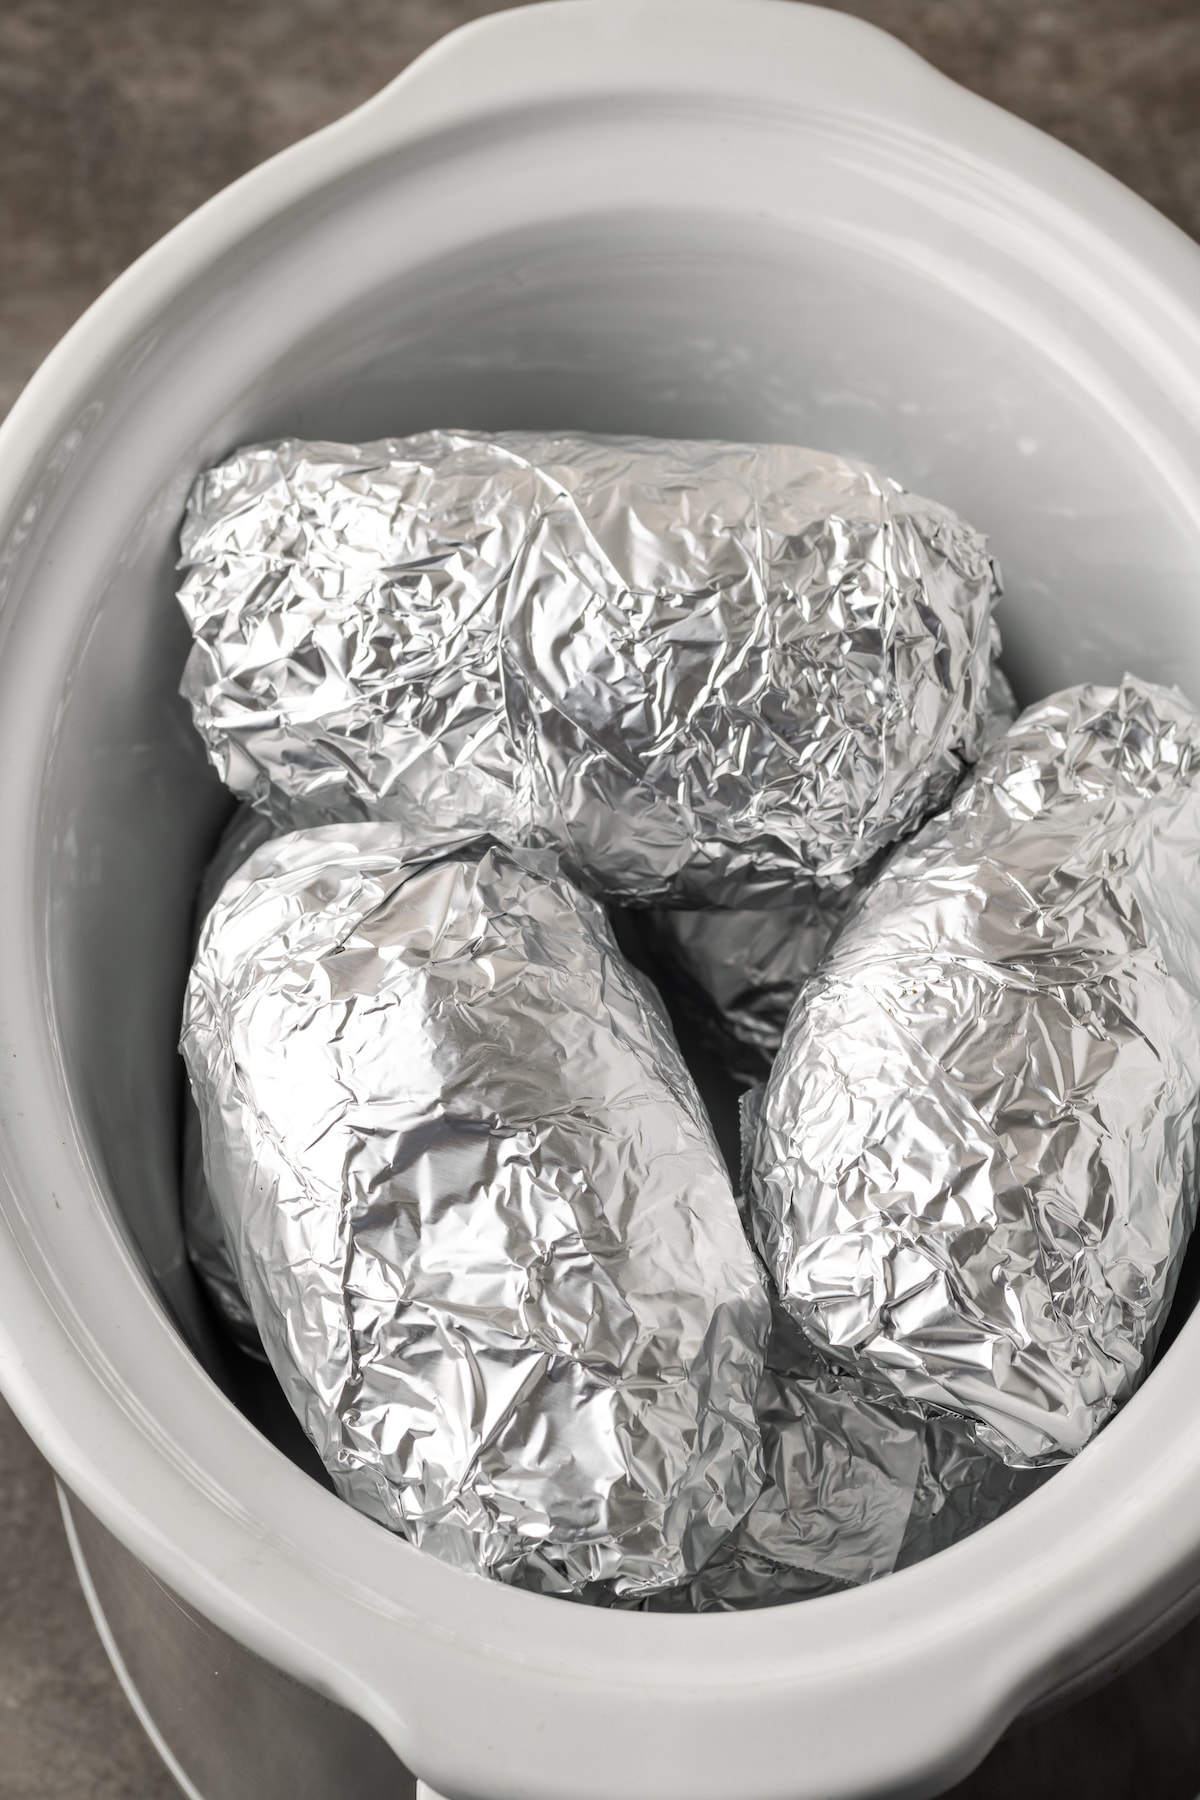 Foil-wrapped potatoes inside the crock pot.